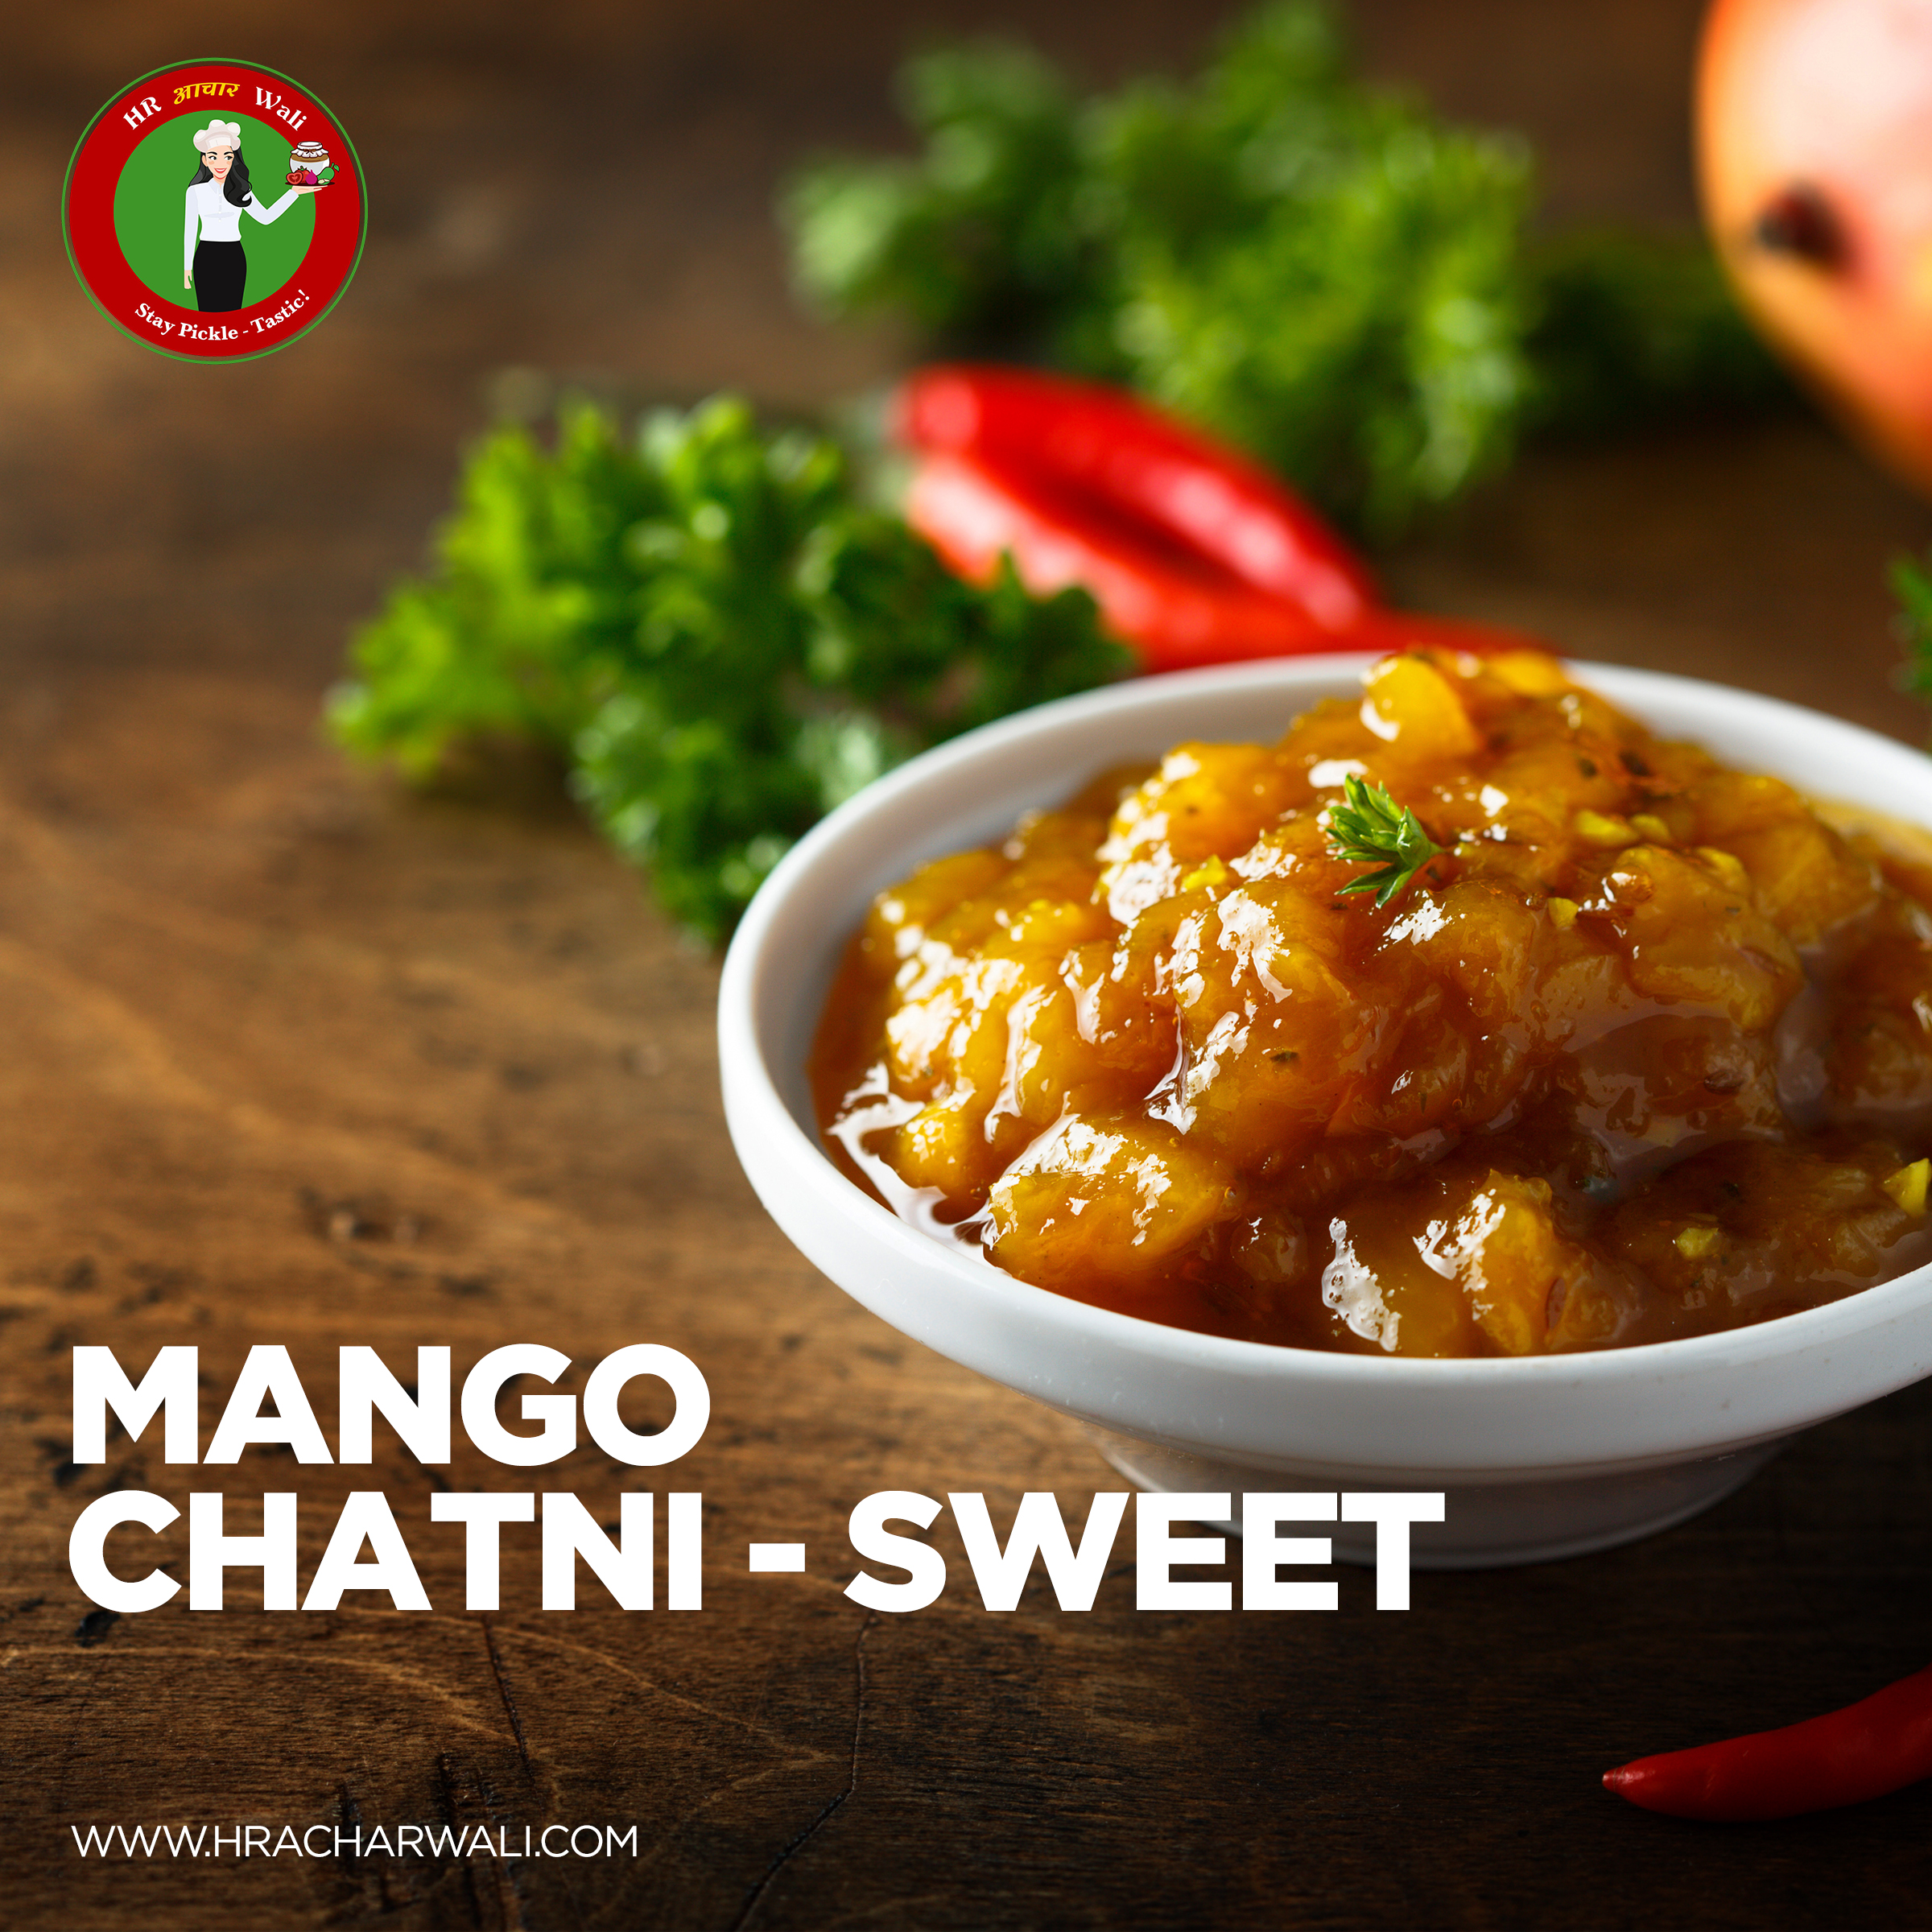 Mango chatni - sweet